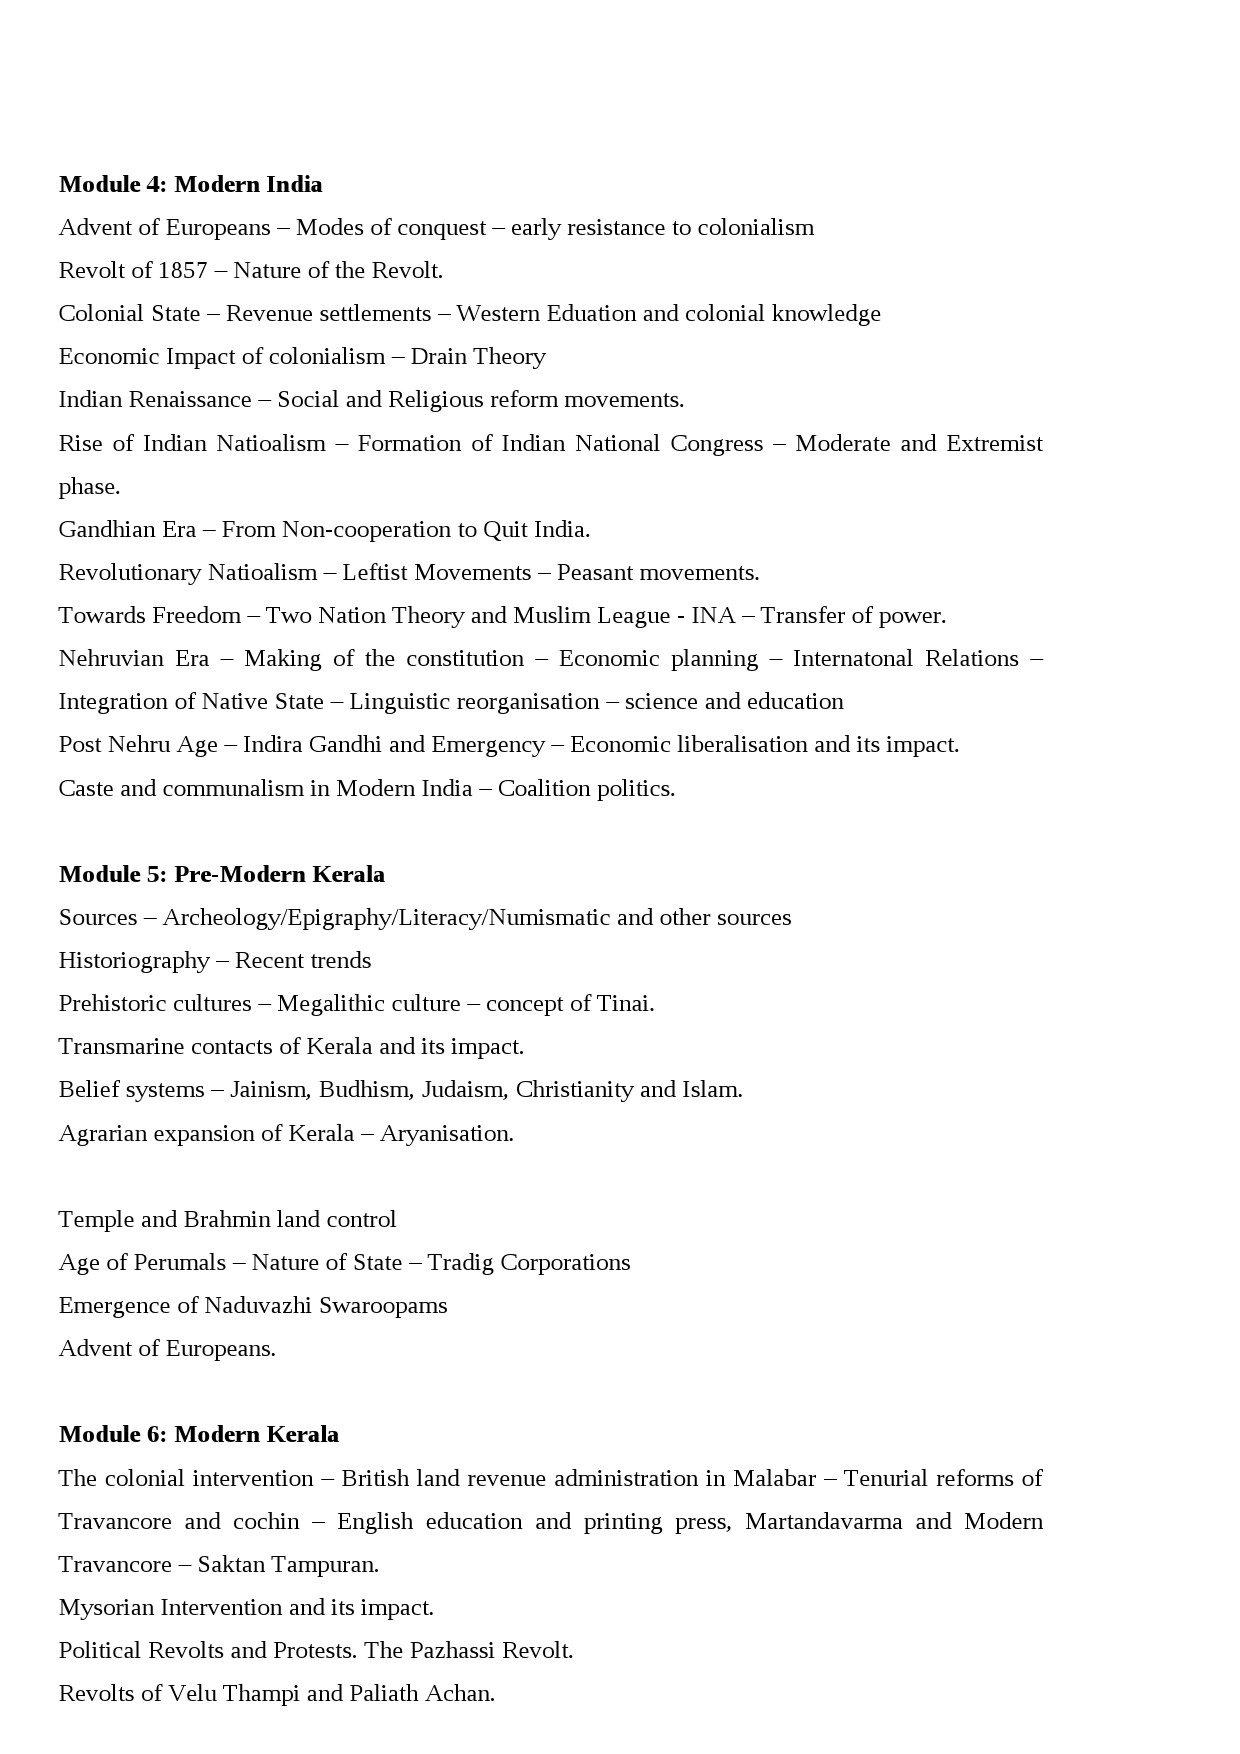 Humanities Syllabus for Kerala PSC 2021 Exam - Notification Image 39